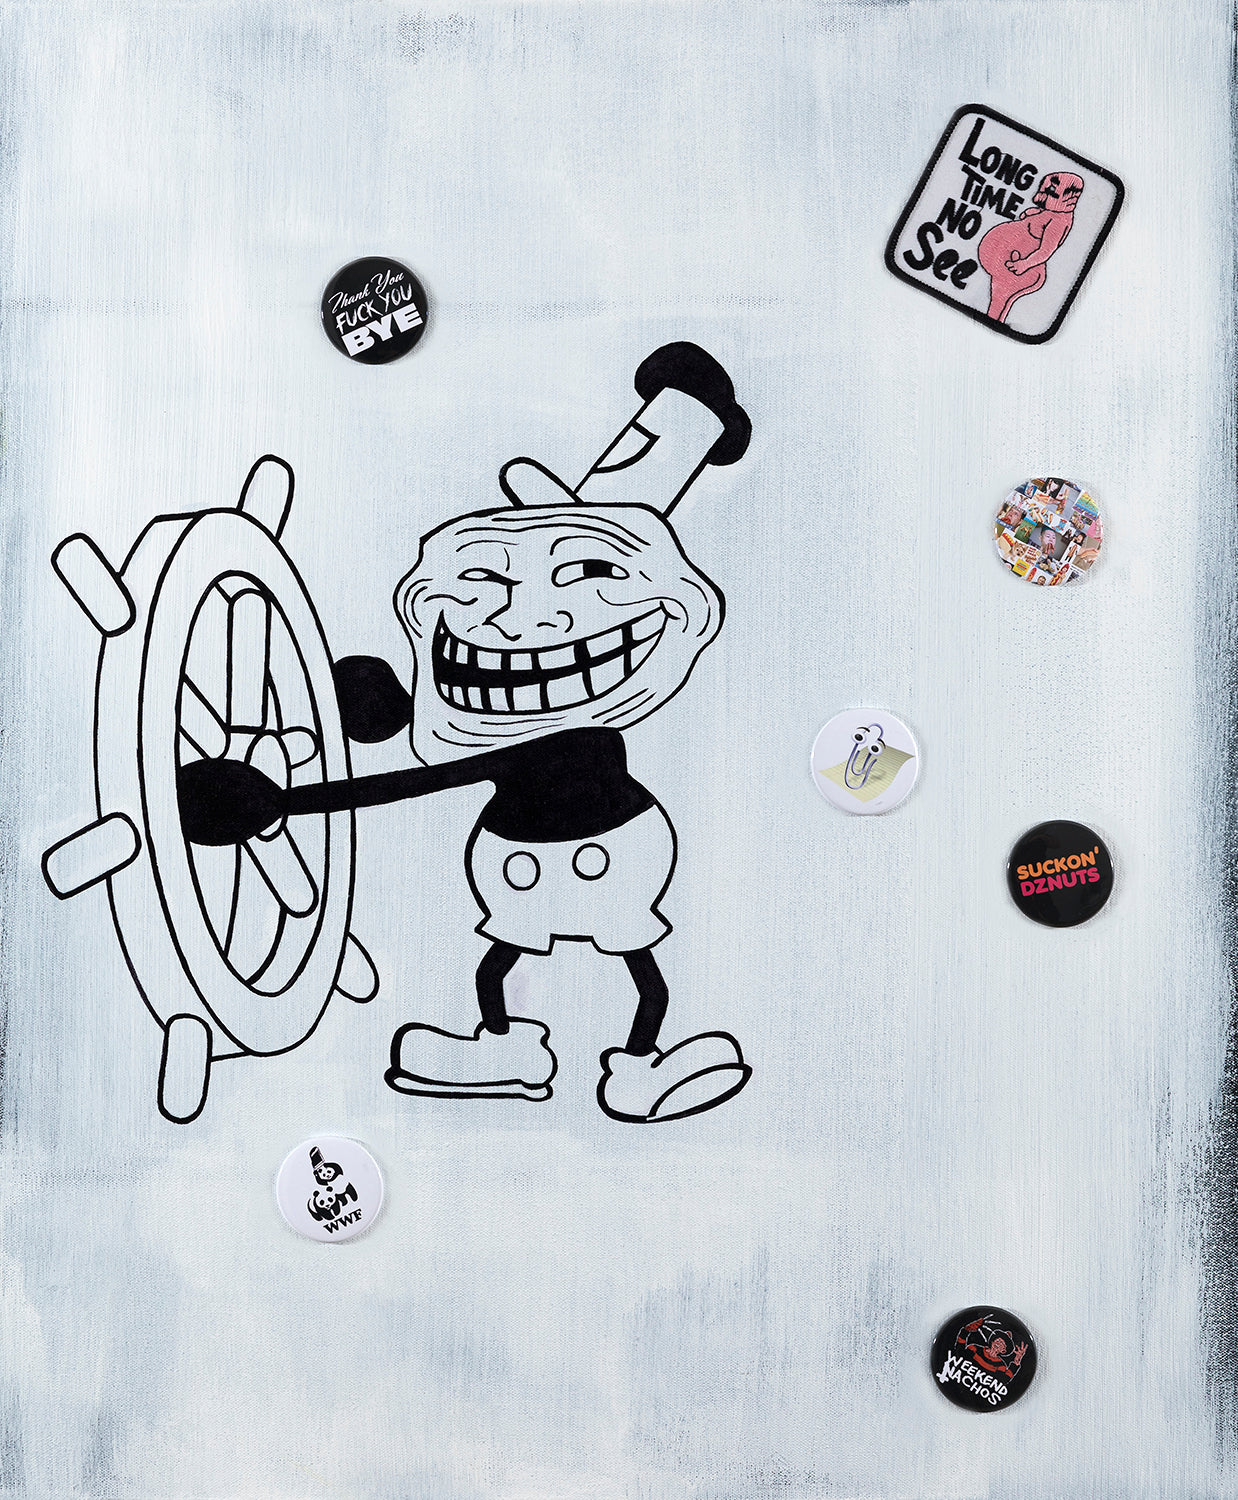 Chris Bors, "Trollface Mickey"